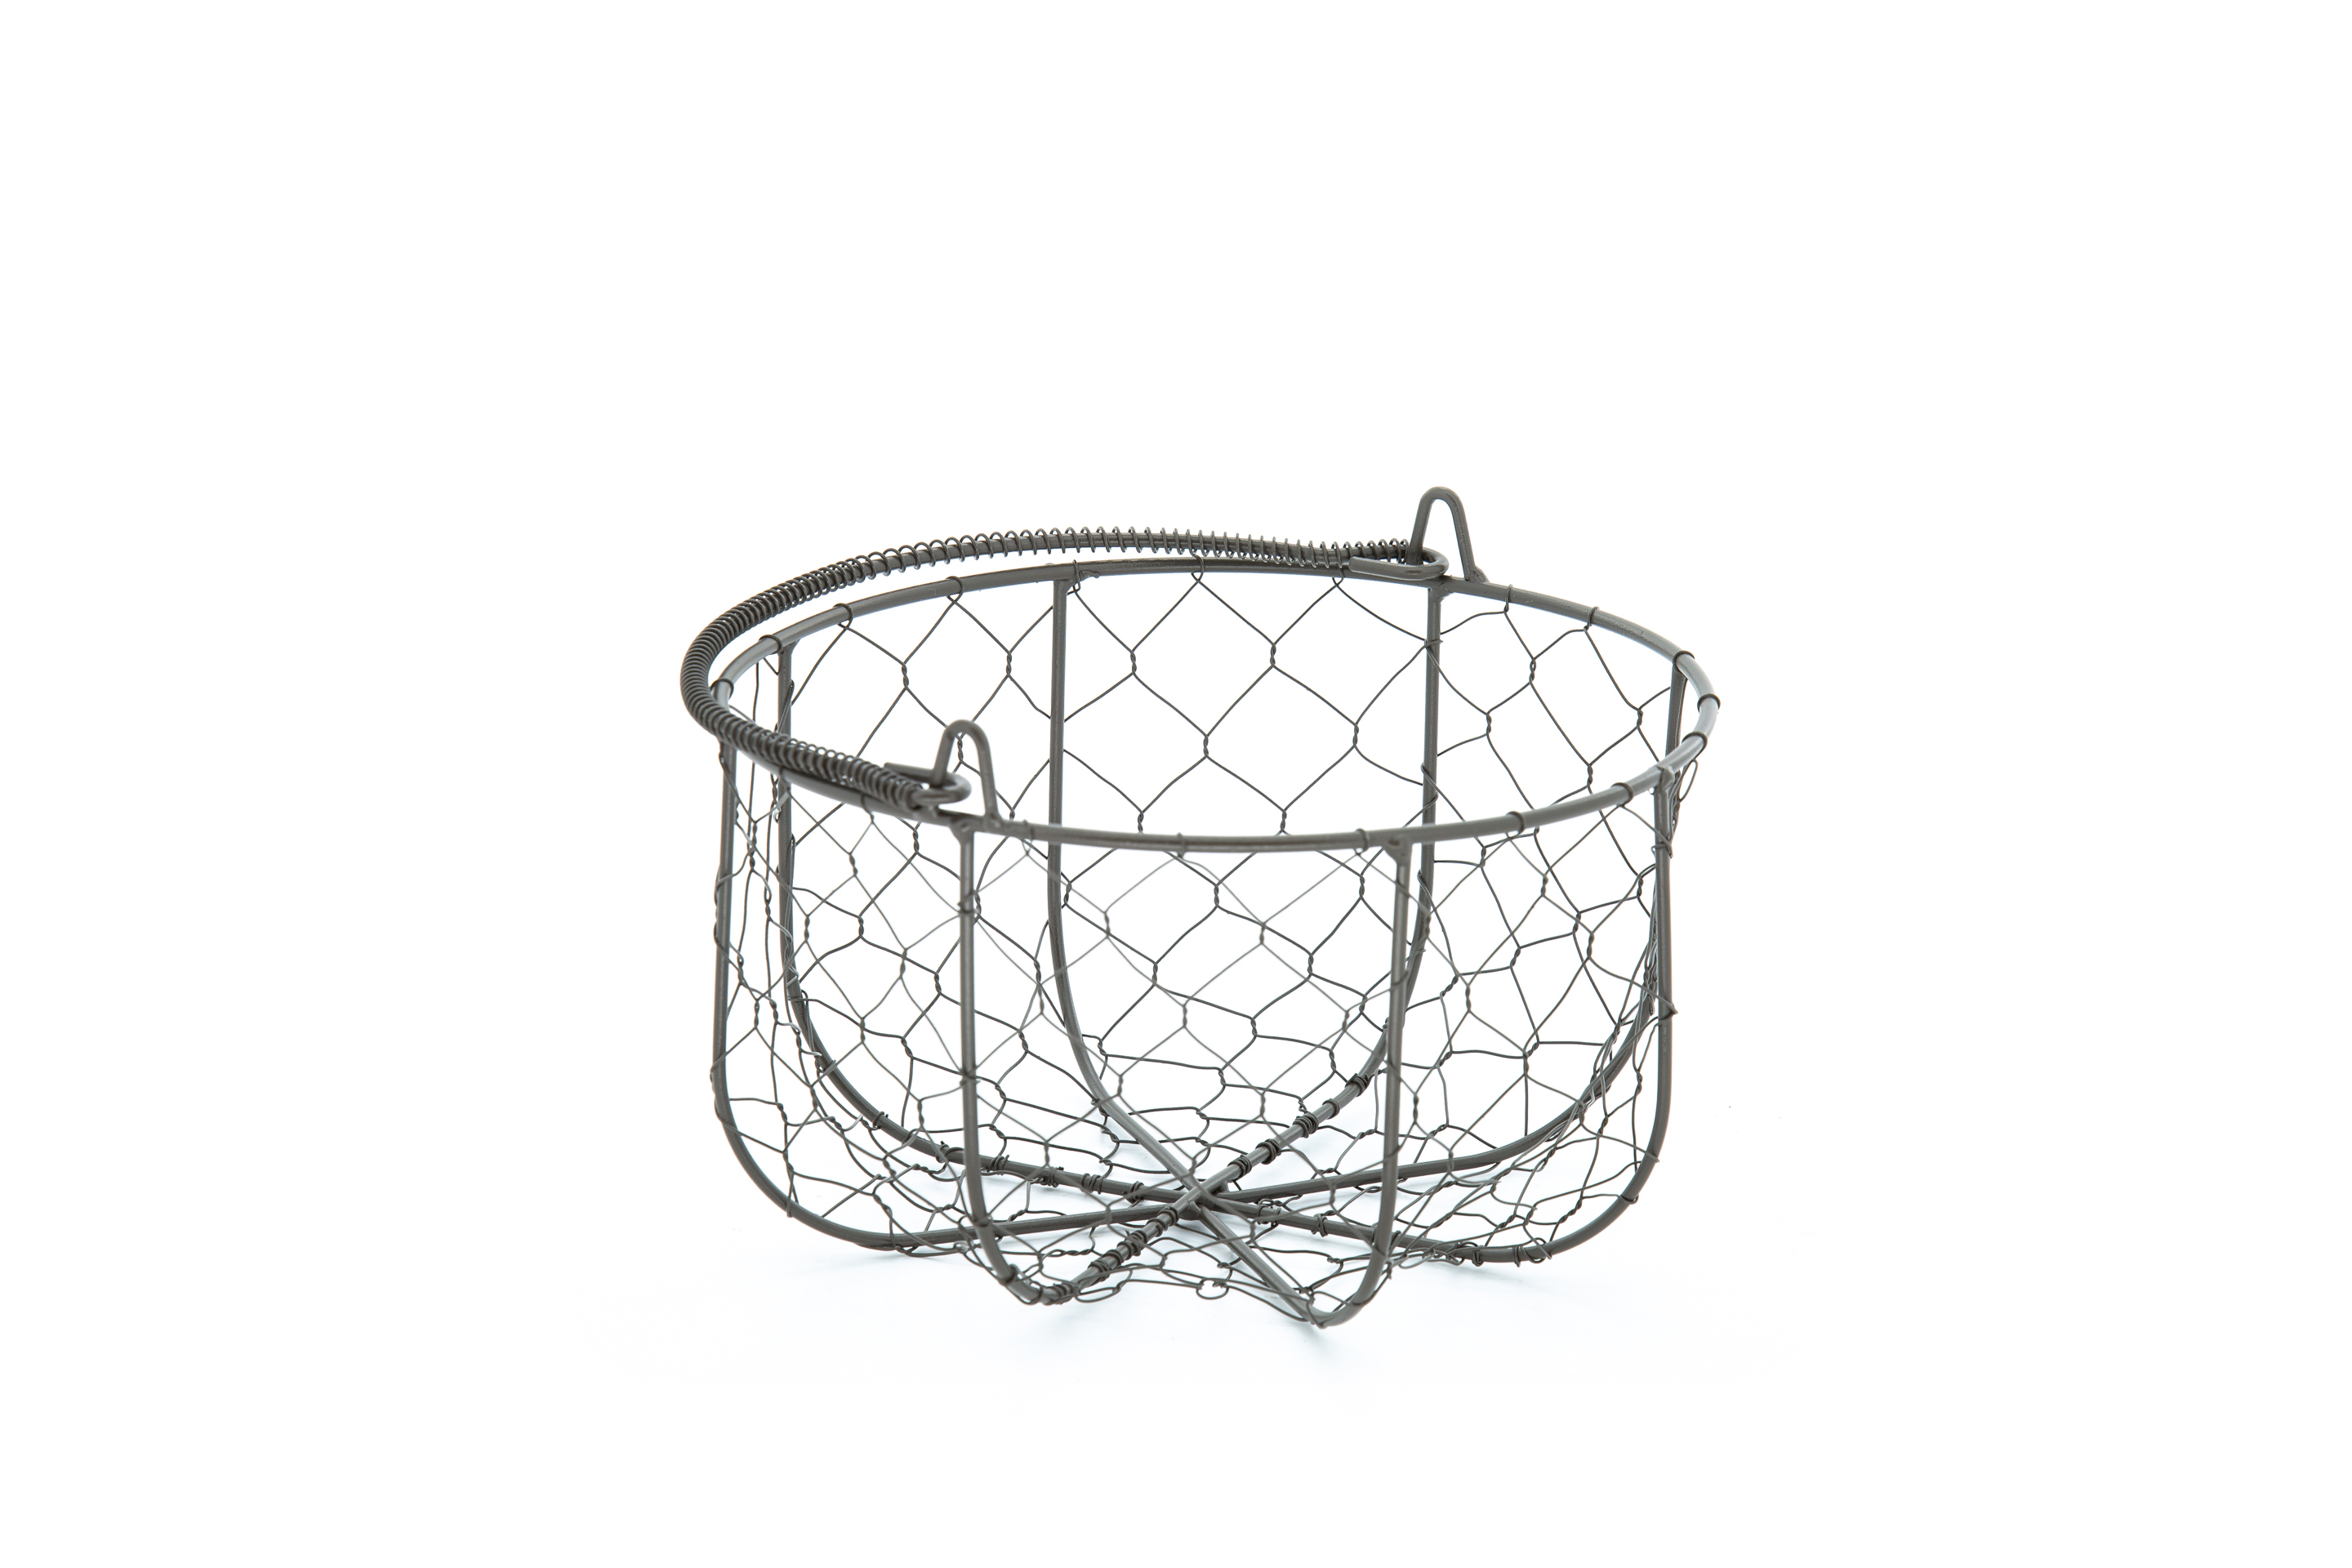 Chicken Wire Mechanics For A Wicker Basket Arrangement For, 48% OFF